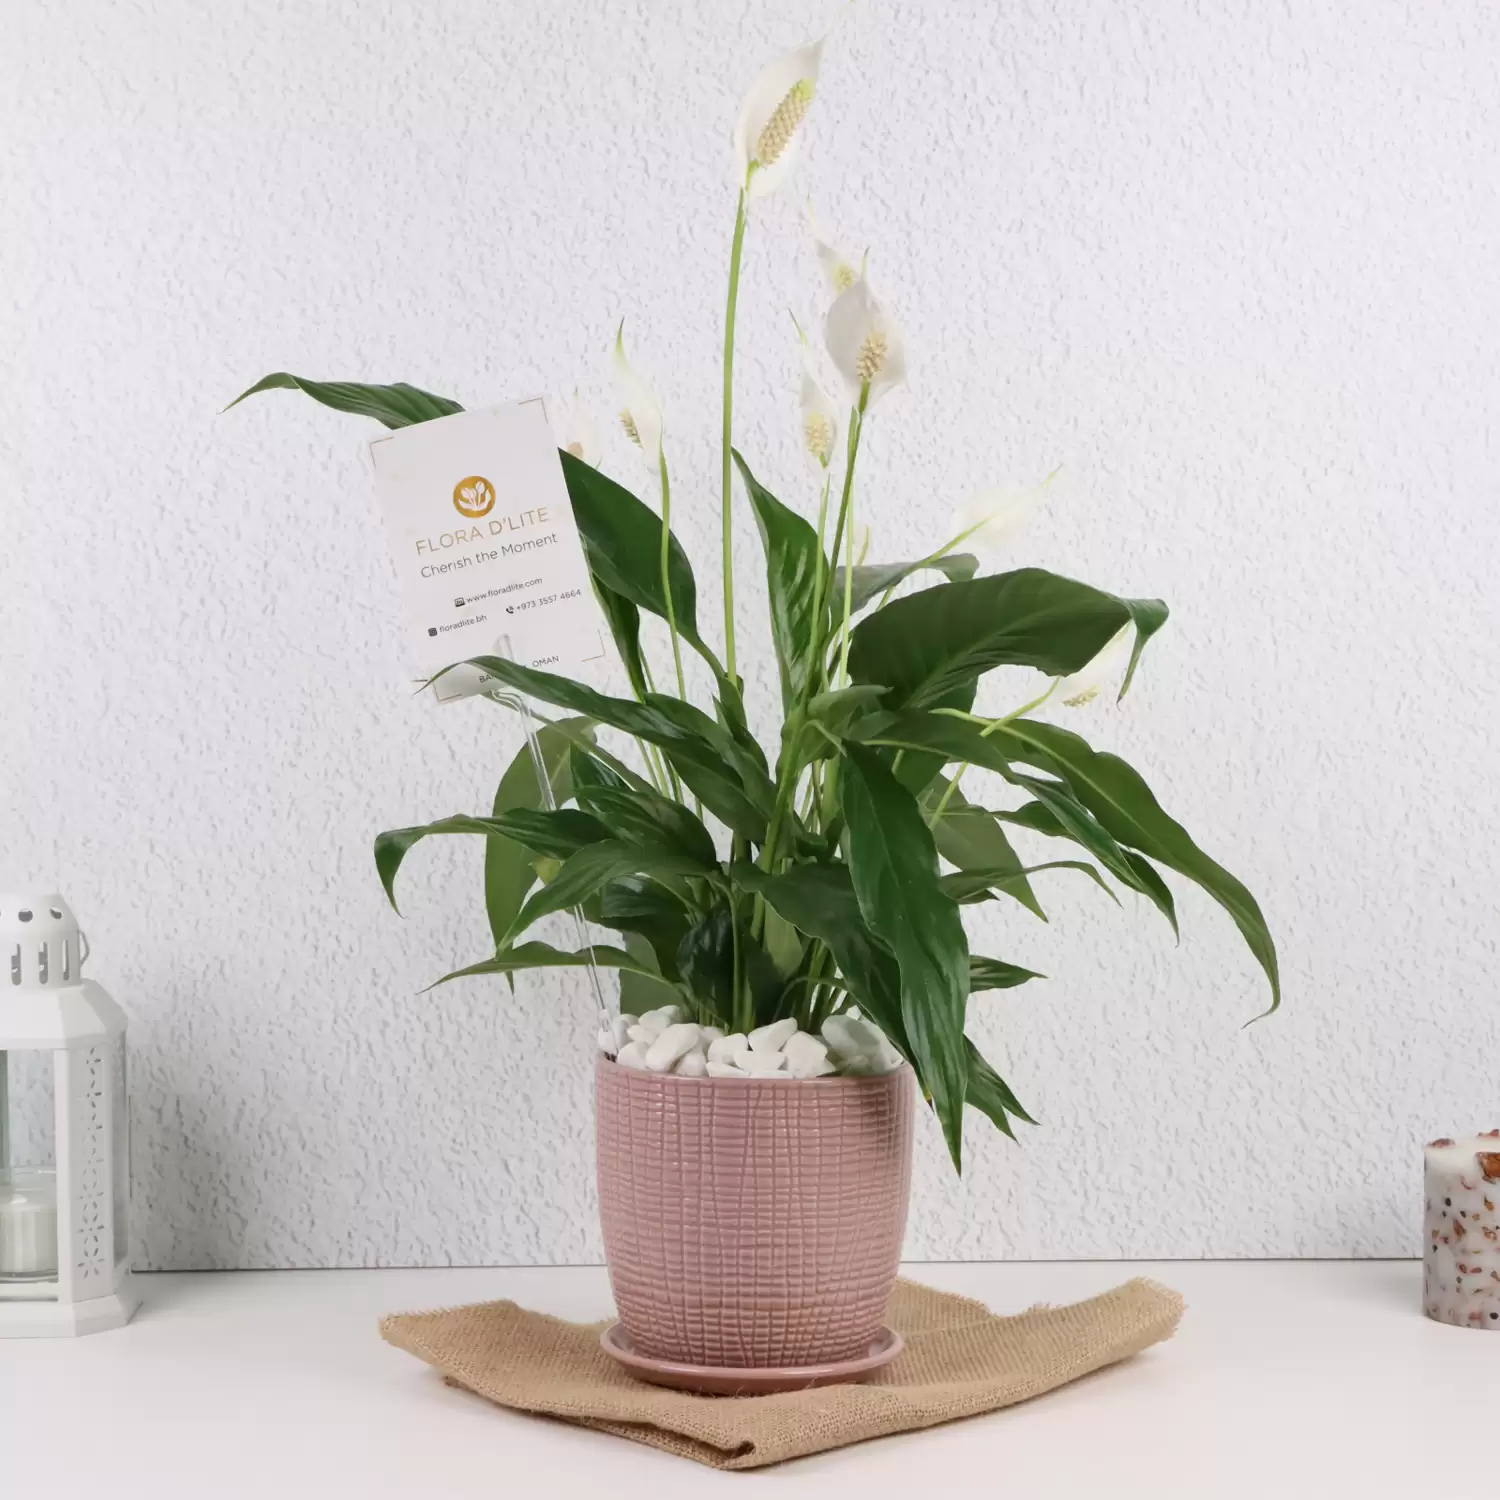 Peace Lily Potted Plant | Plant Gifts To Buy | Plant Shop Bahrain - Flora D'lite